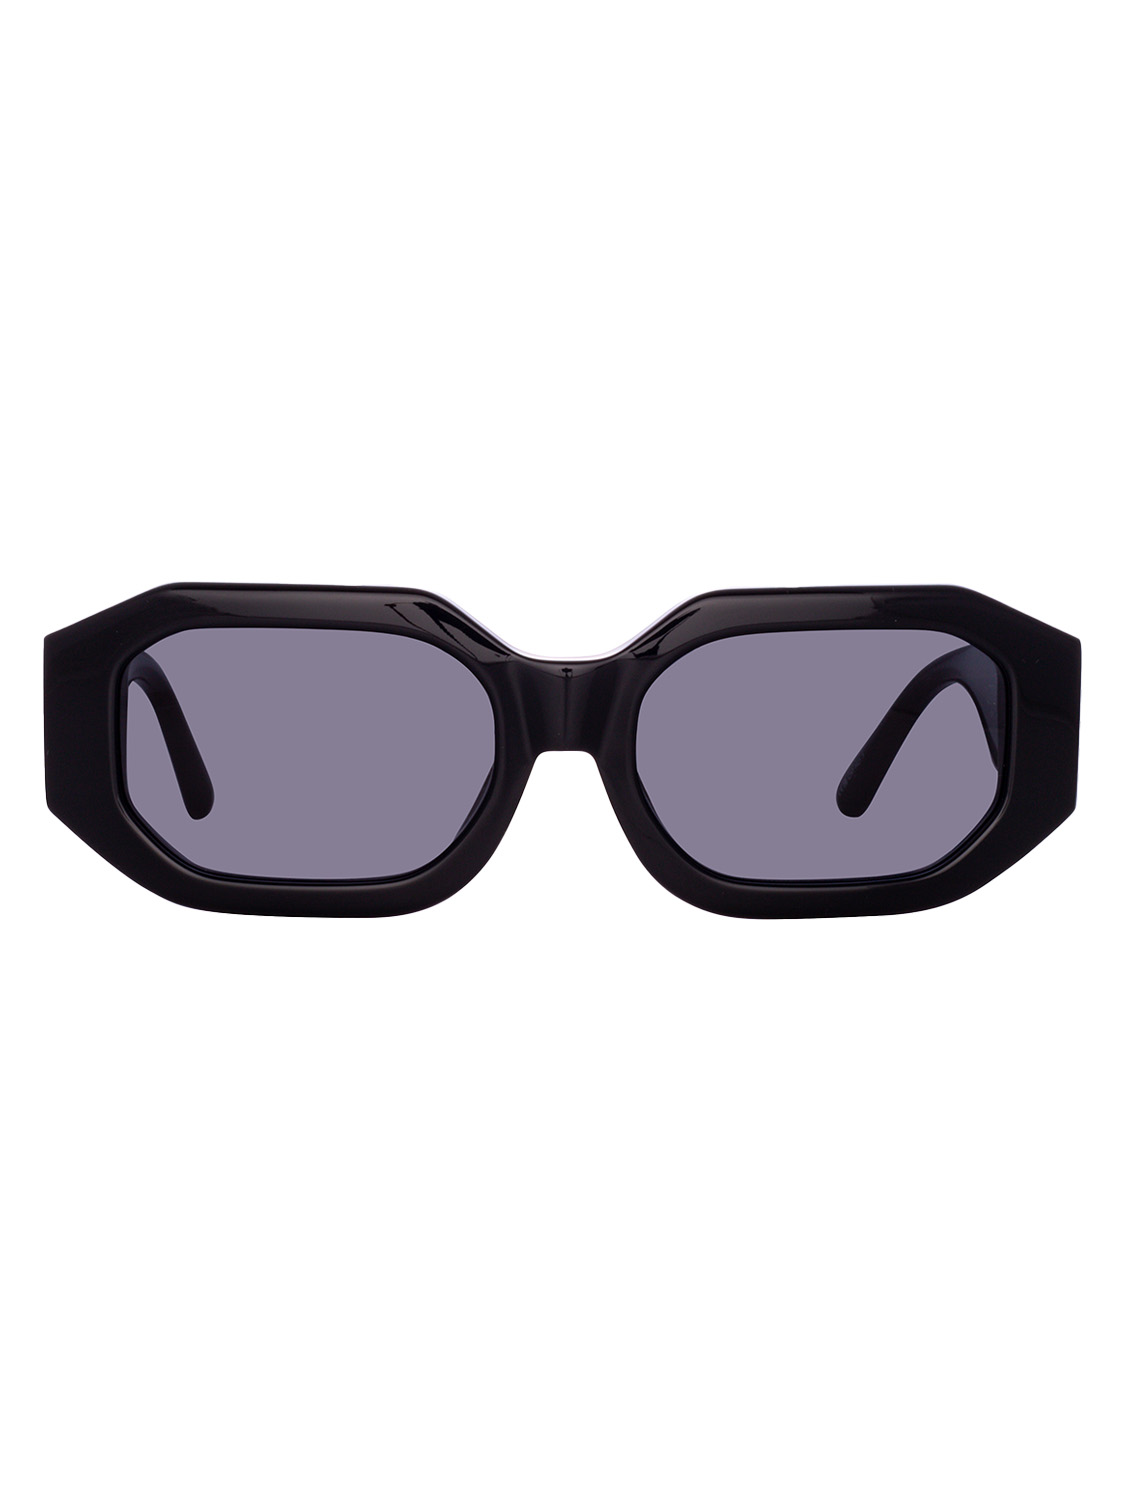 Blake - Square sunglasses